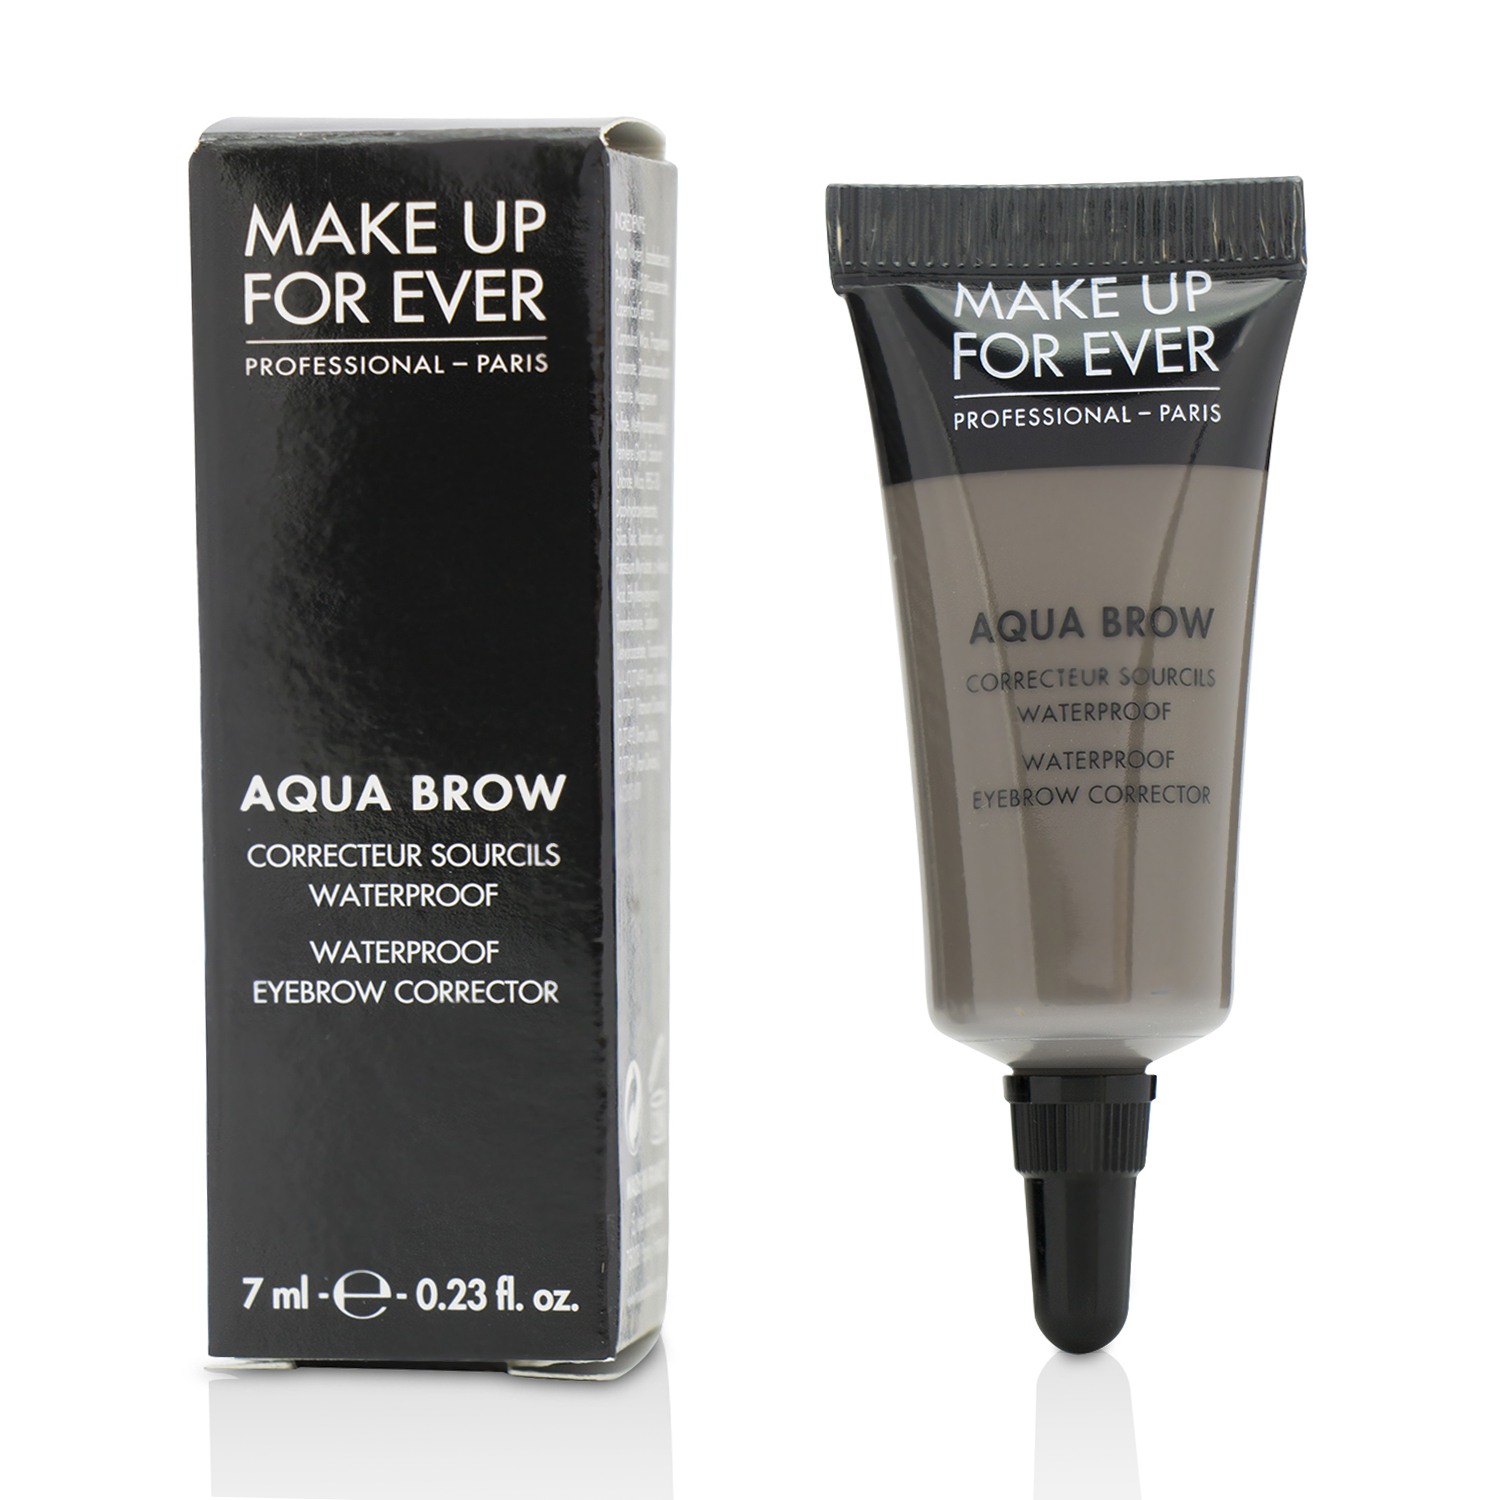 Aqua Brow Waterproof Eyebrow Corrector - # 35 (Taupe) Make Up For Ever Image